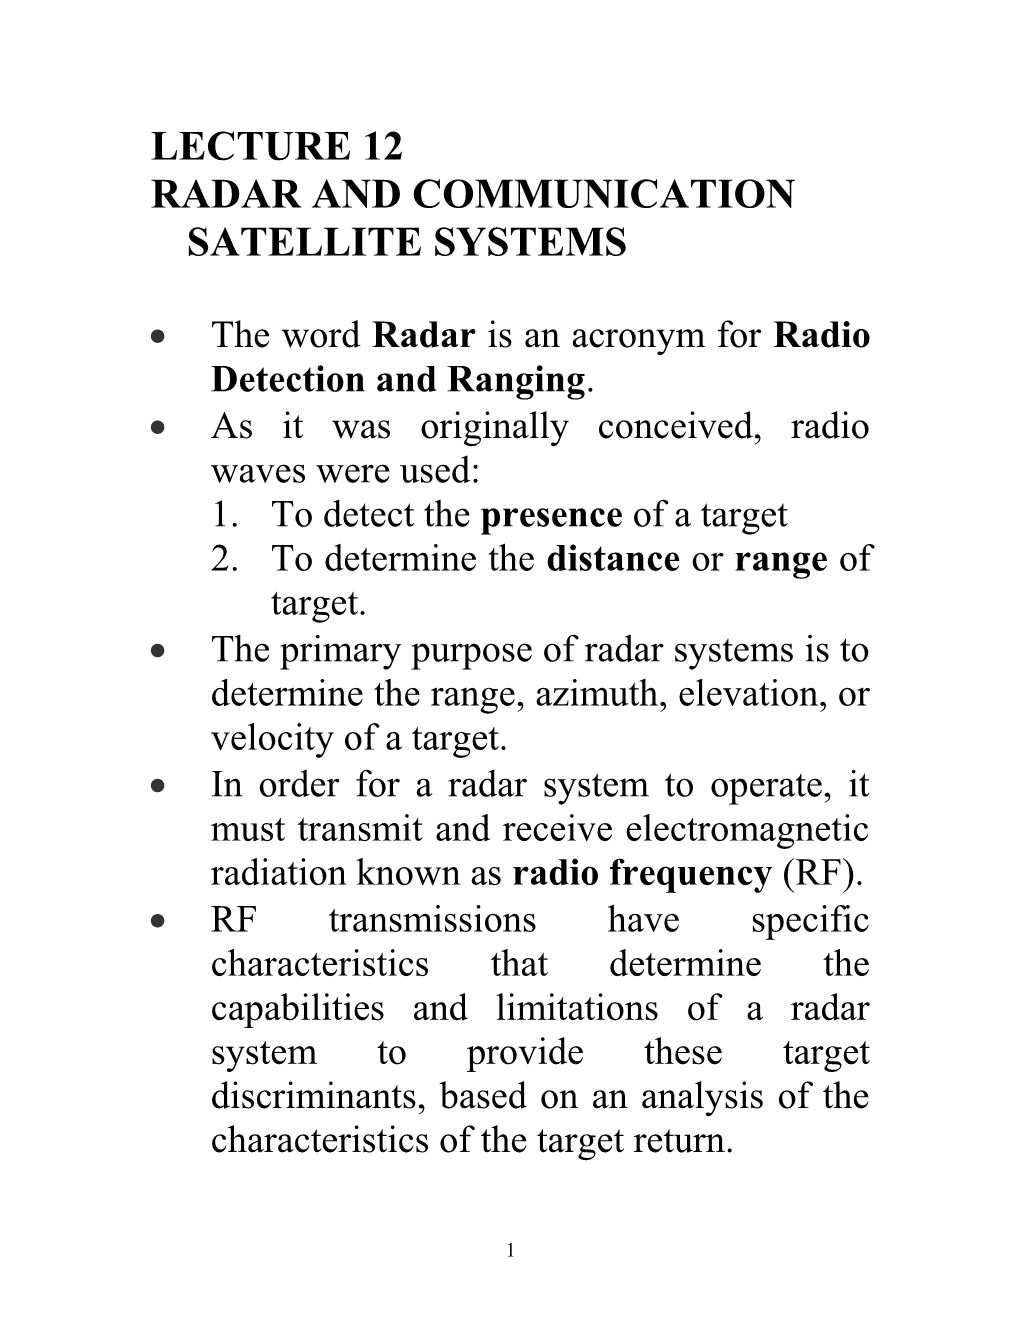 Radar and Communication Satellite Systems